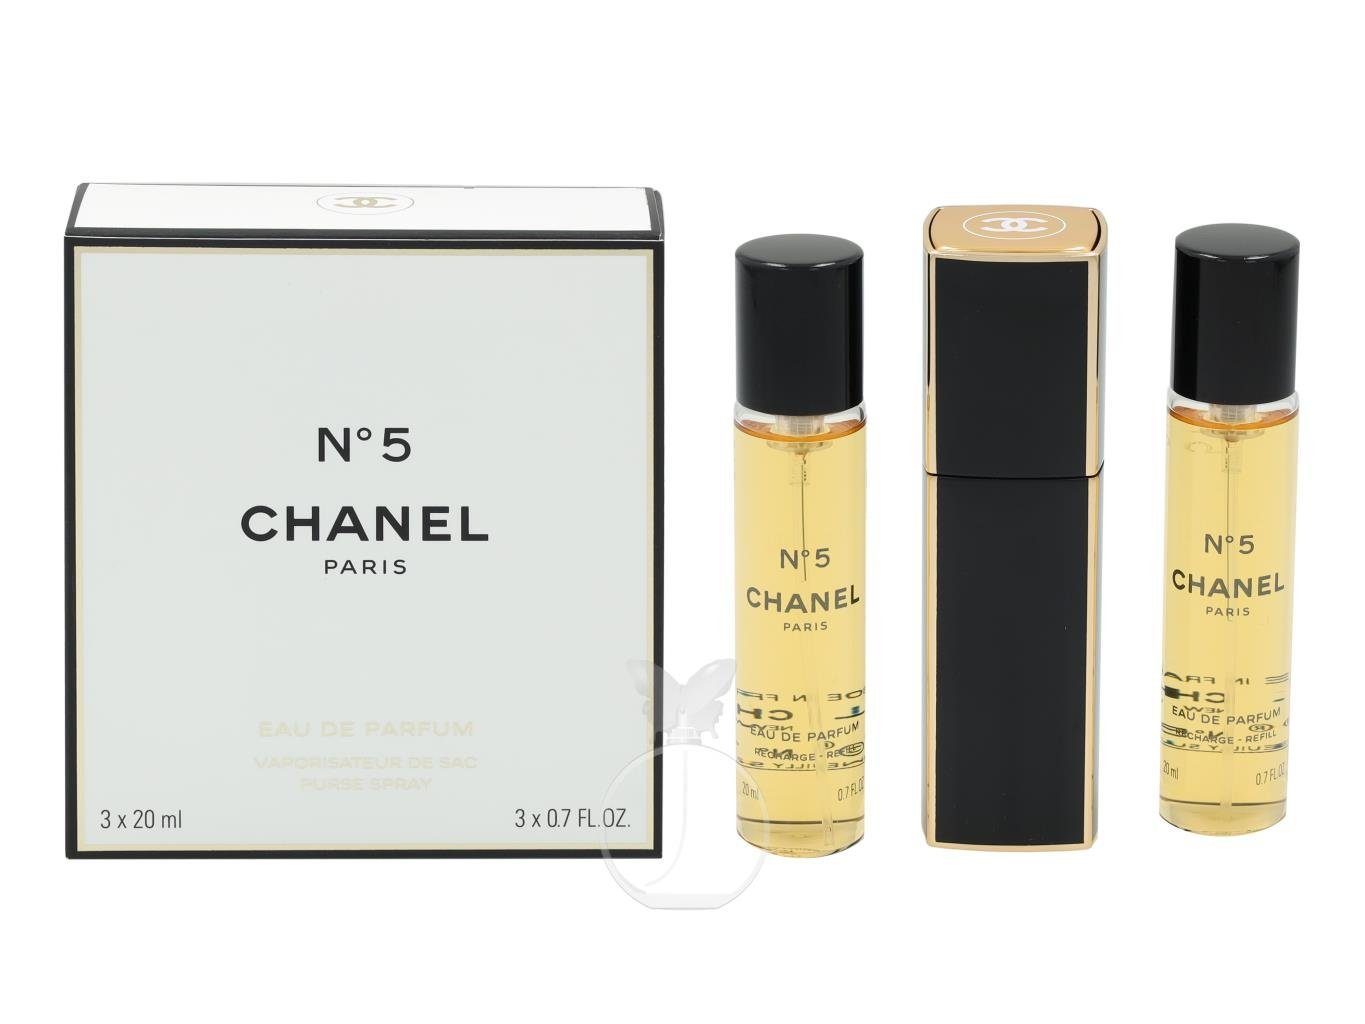 CHANEL and 3 x Parfum 20 Spray Eau Zerstäuber mit de Parfum Chanel Twist No de Eau ml 5